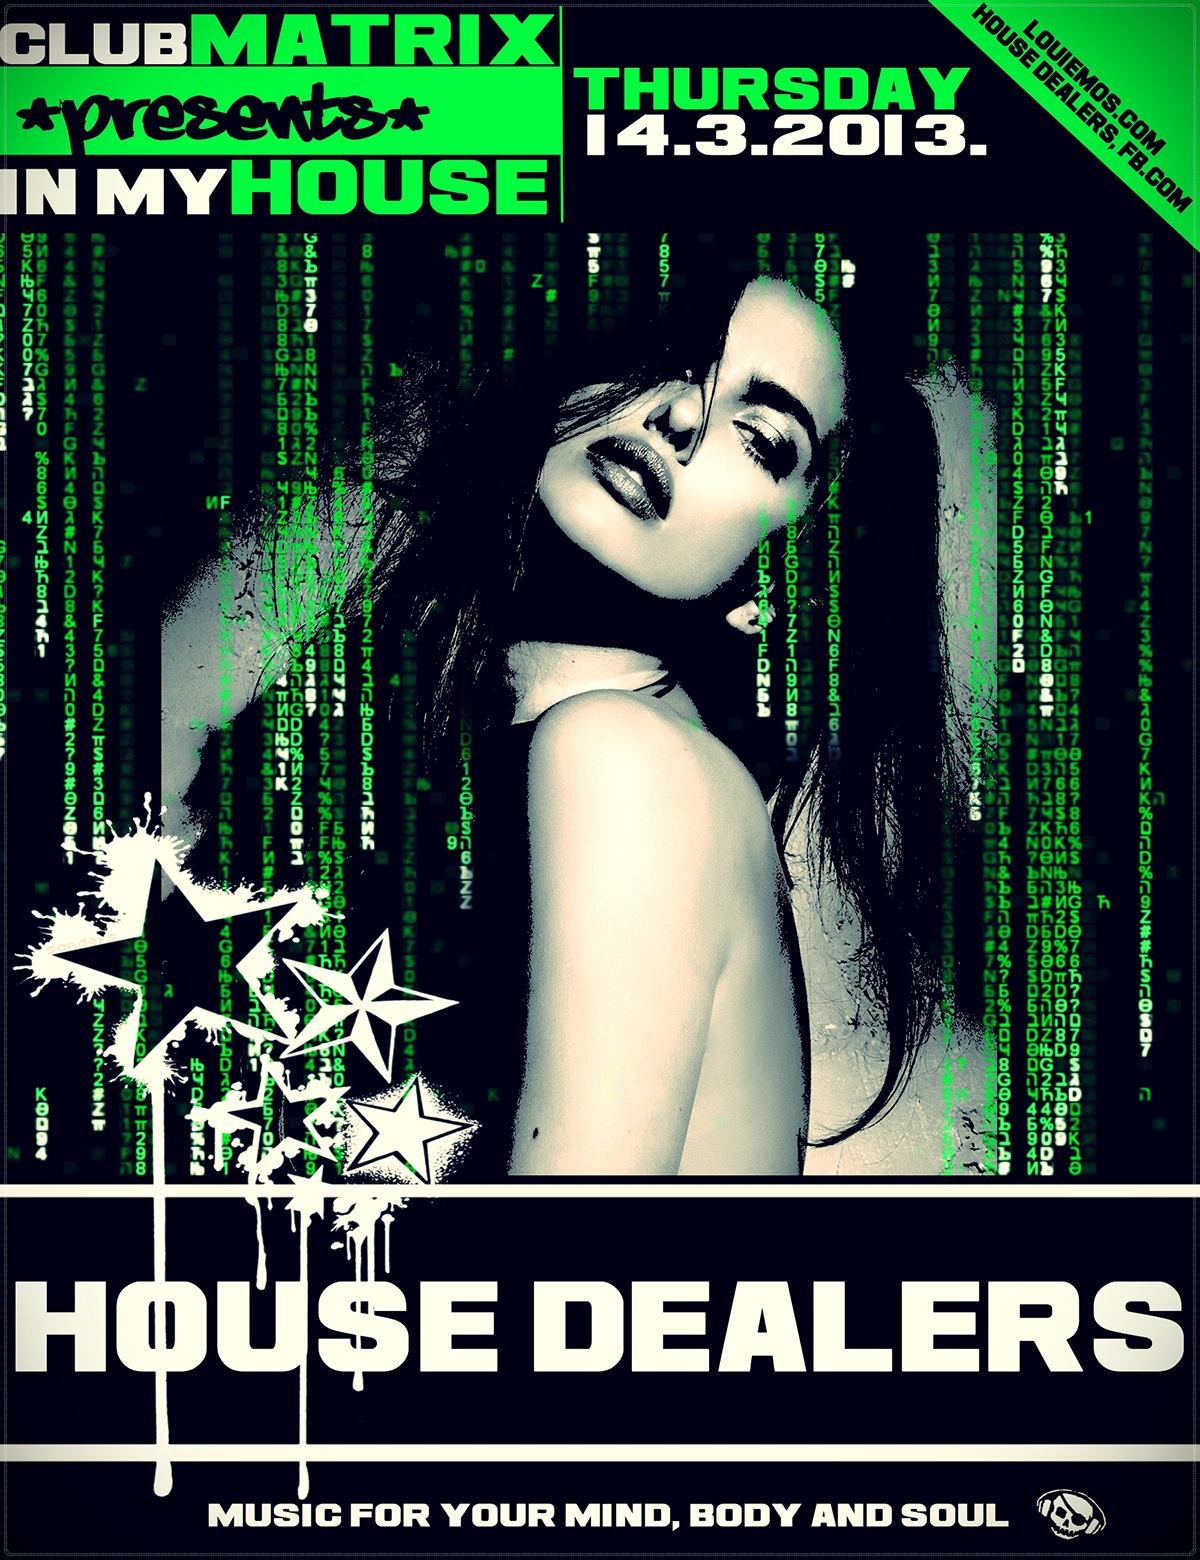 House Dealers Louie Mos osijek Croatia House music party Events